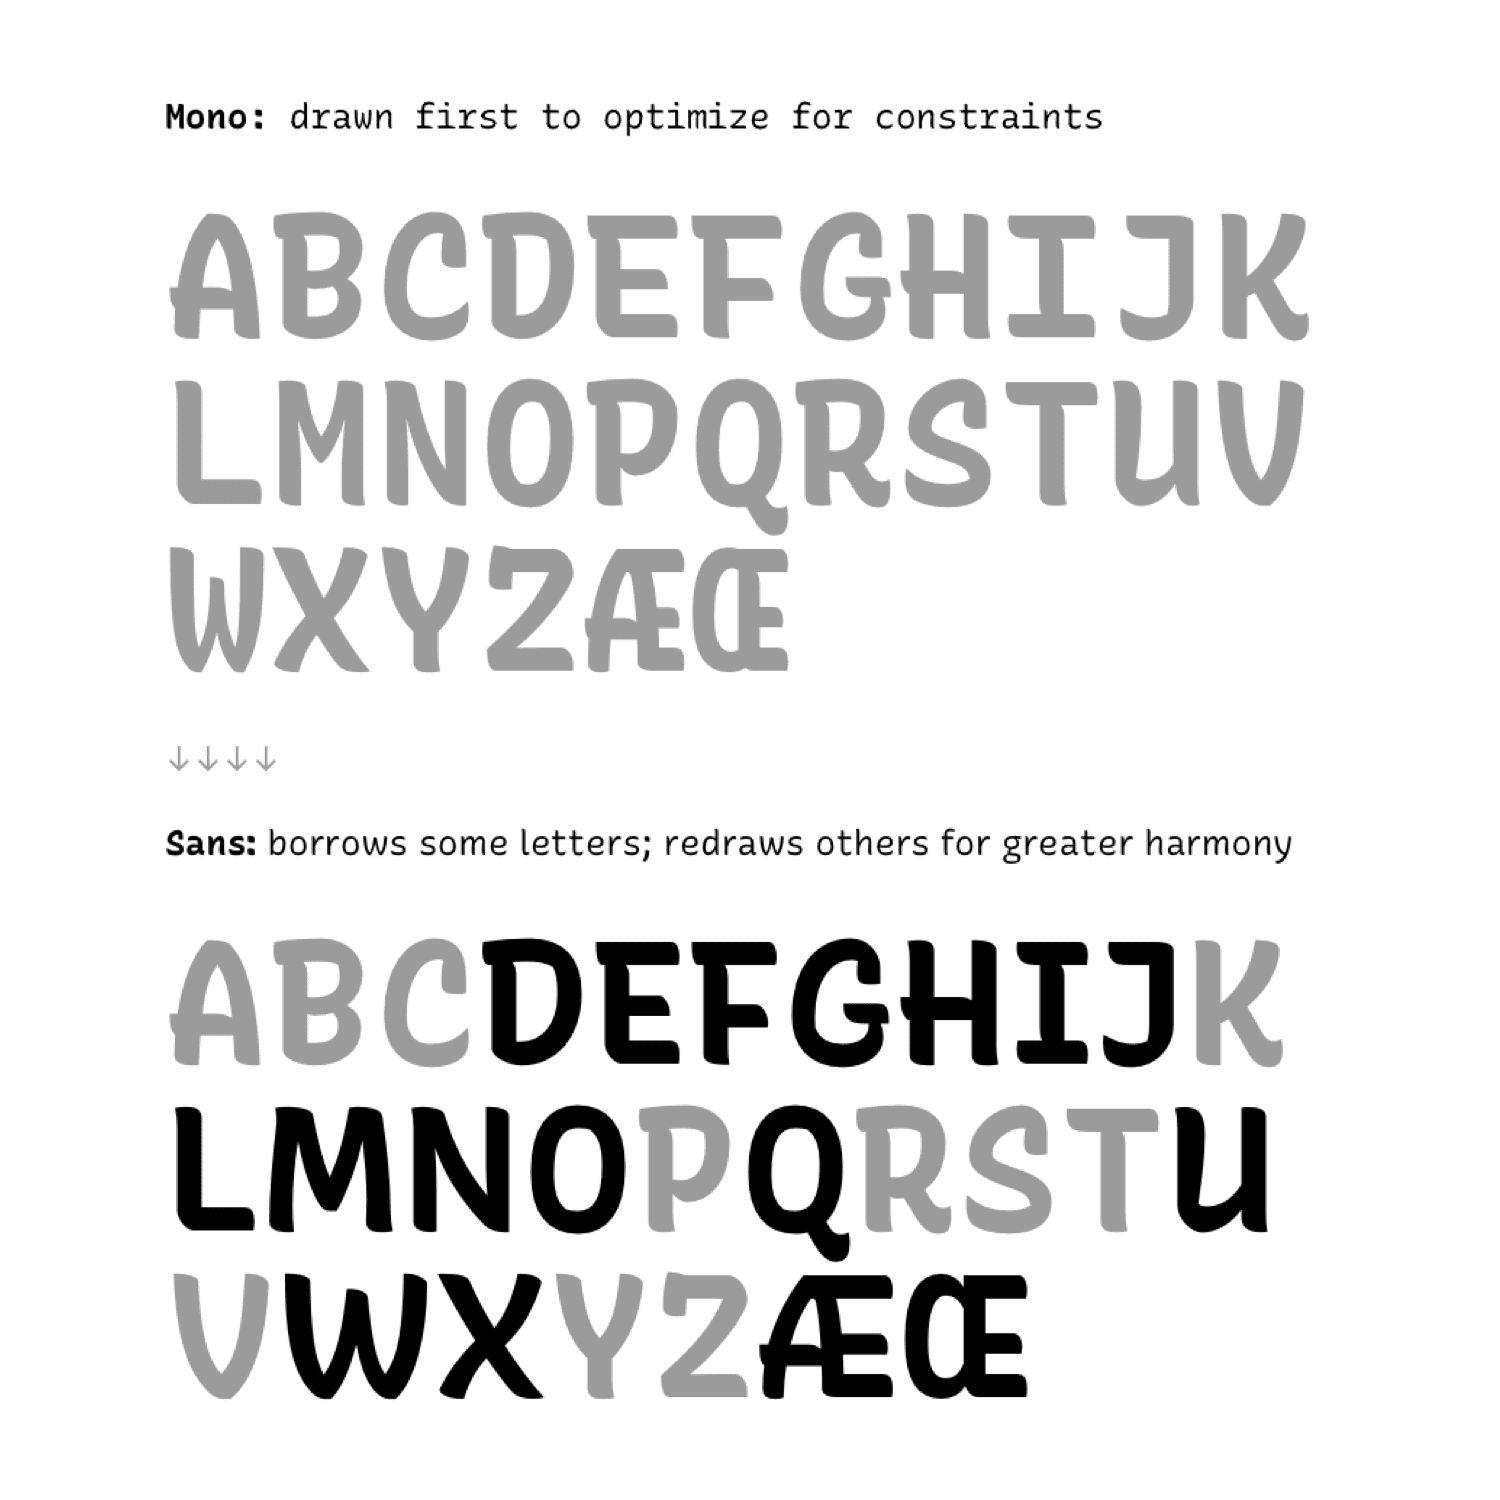 letters borrowed between recursive mono & sans, uppercase